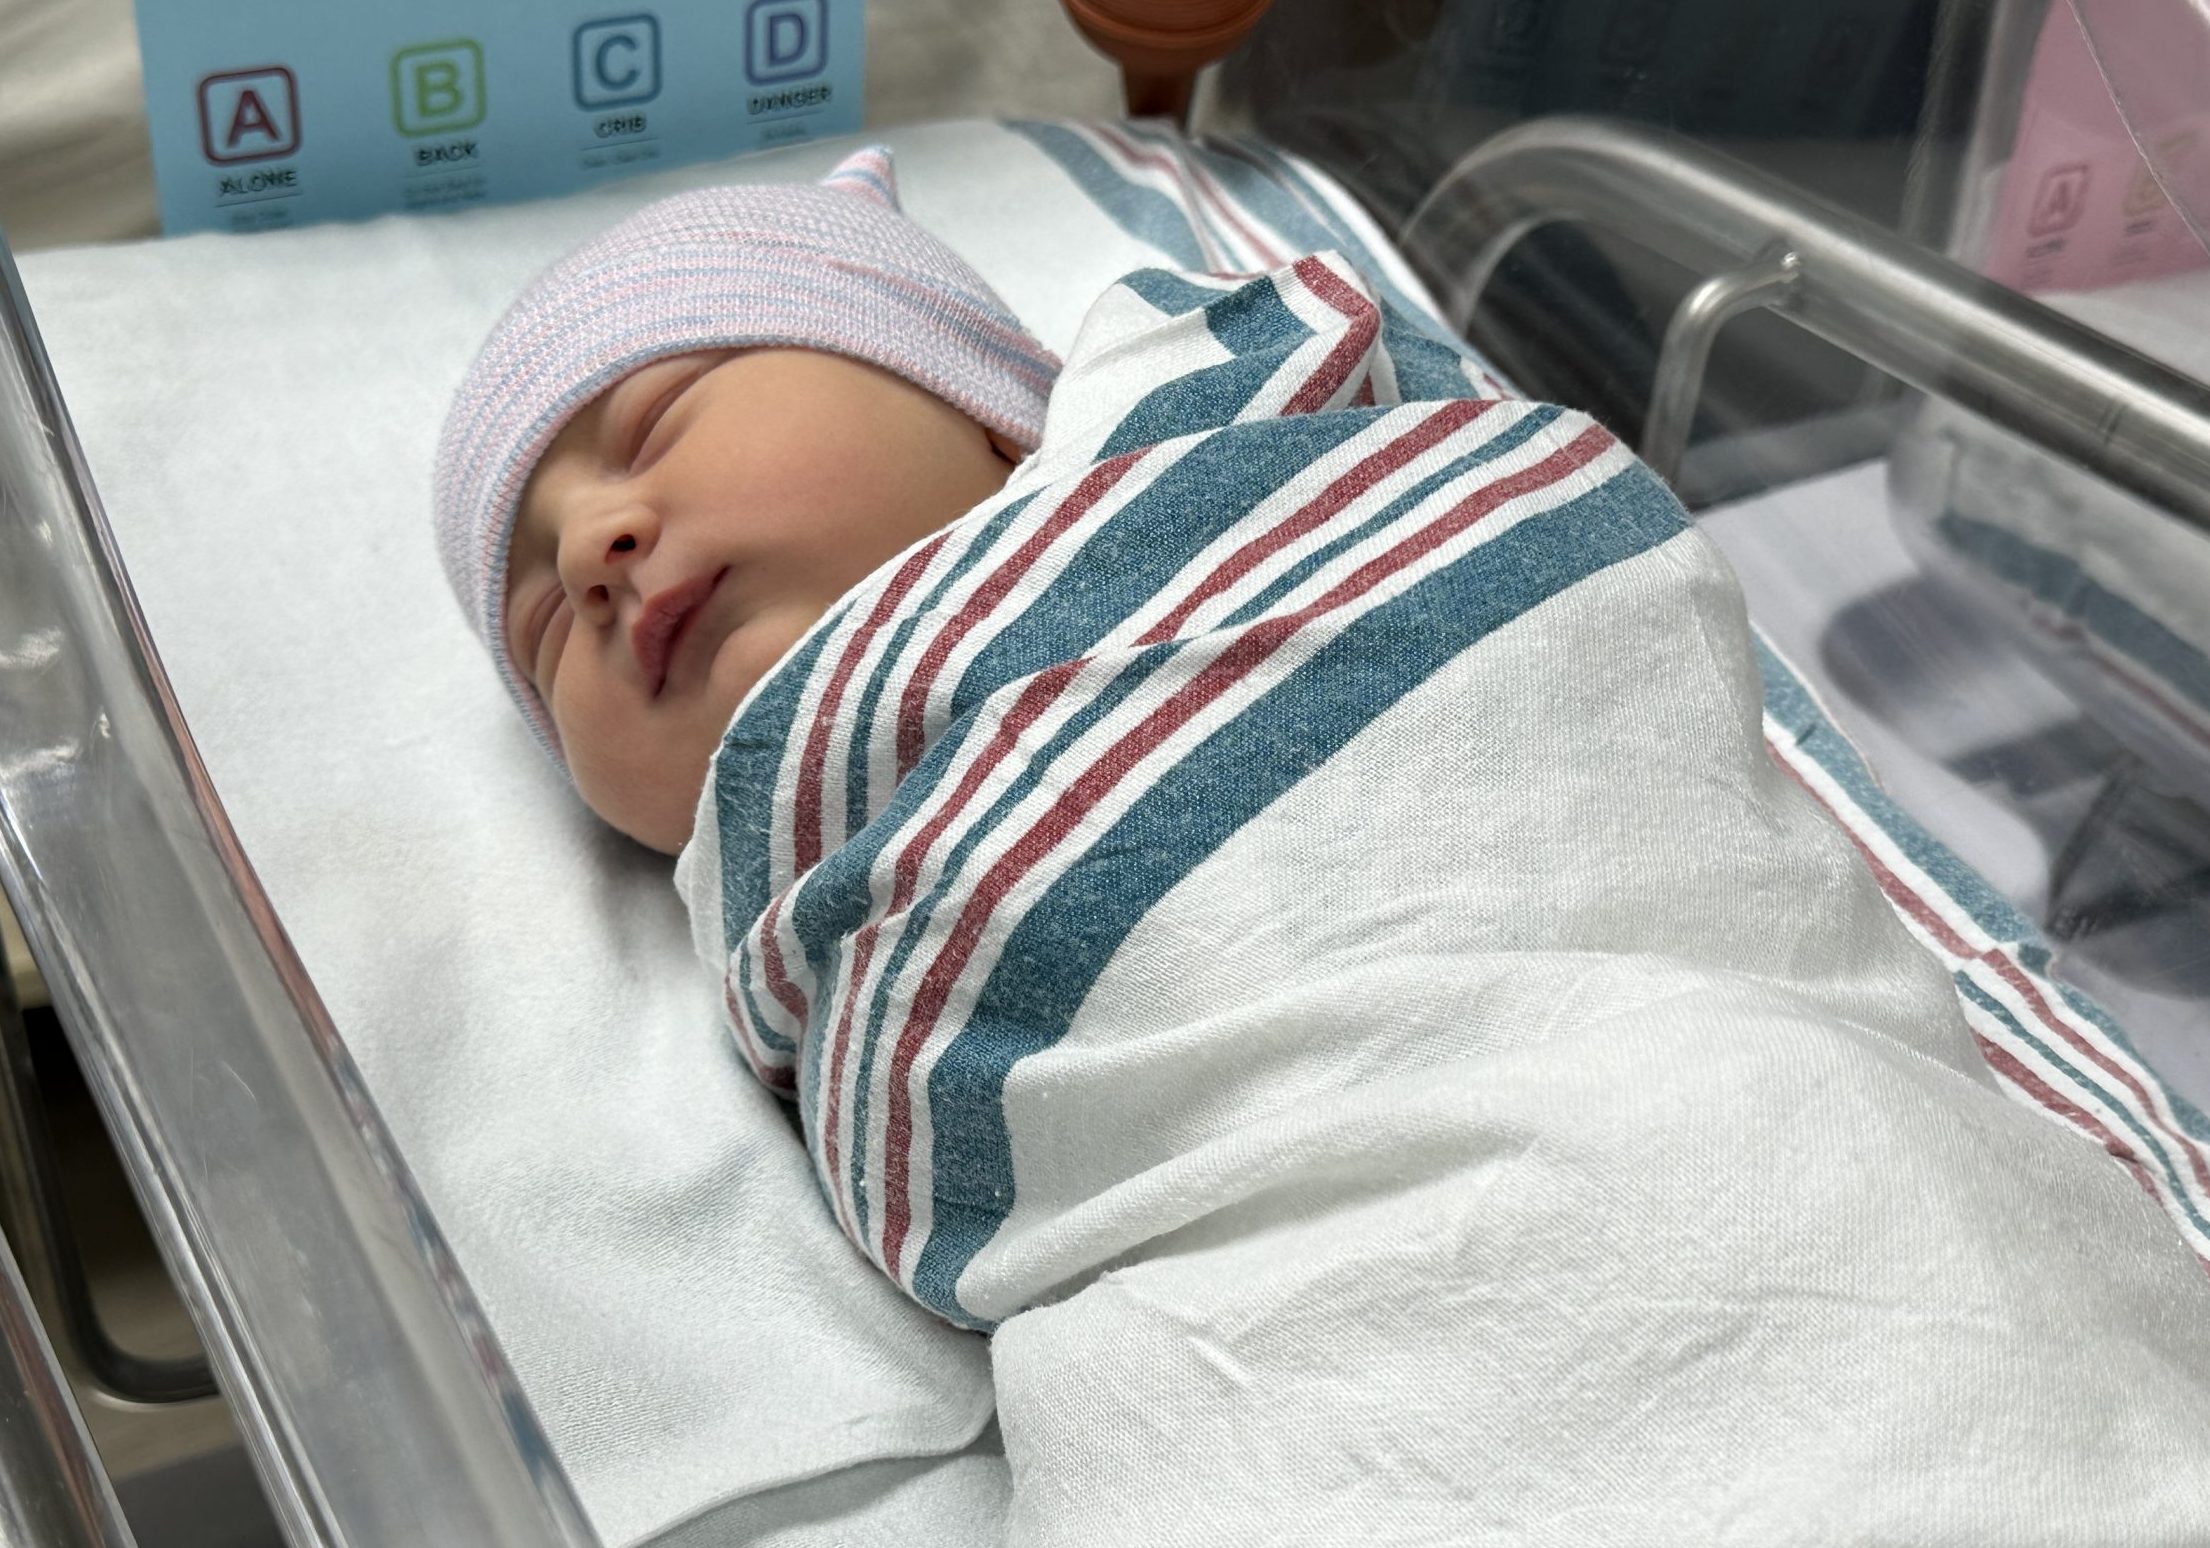 13 Leap Day babies born at Baptist Health Louisville